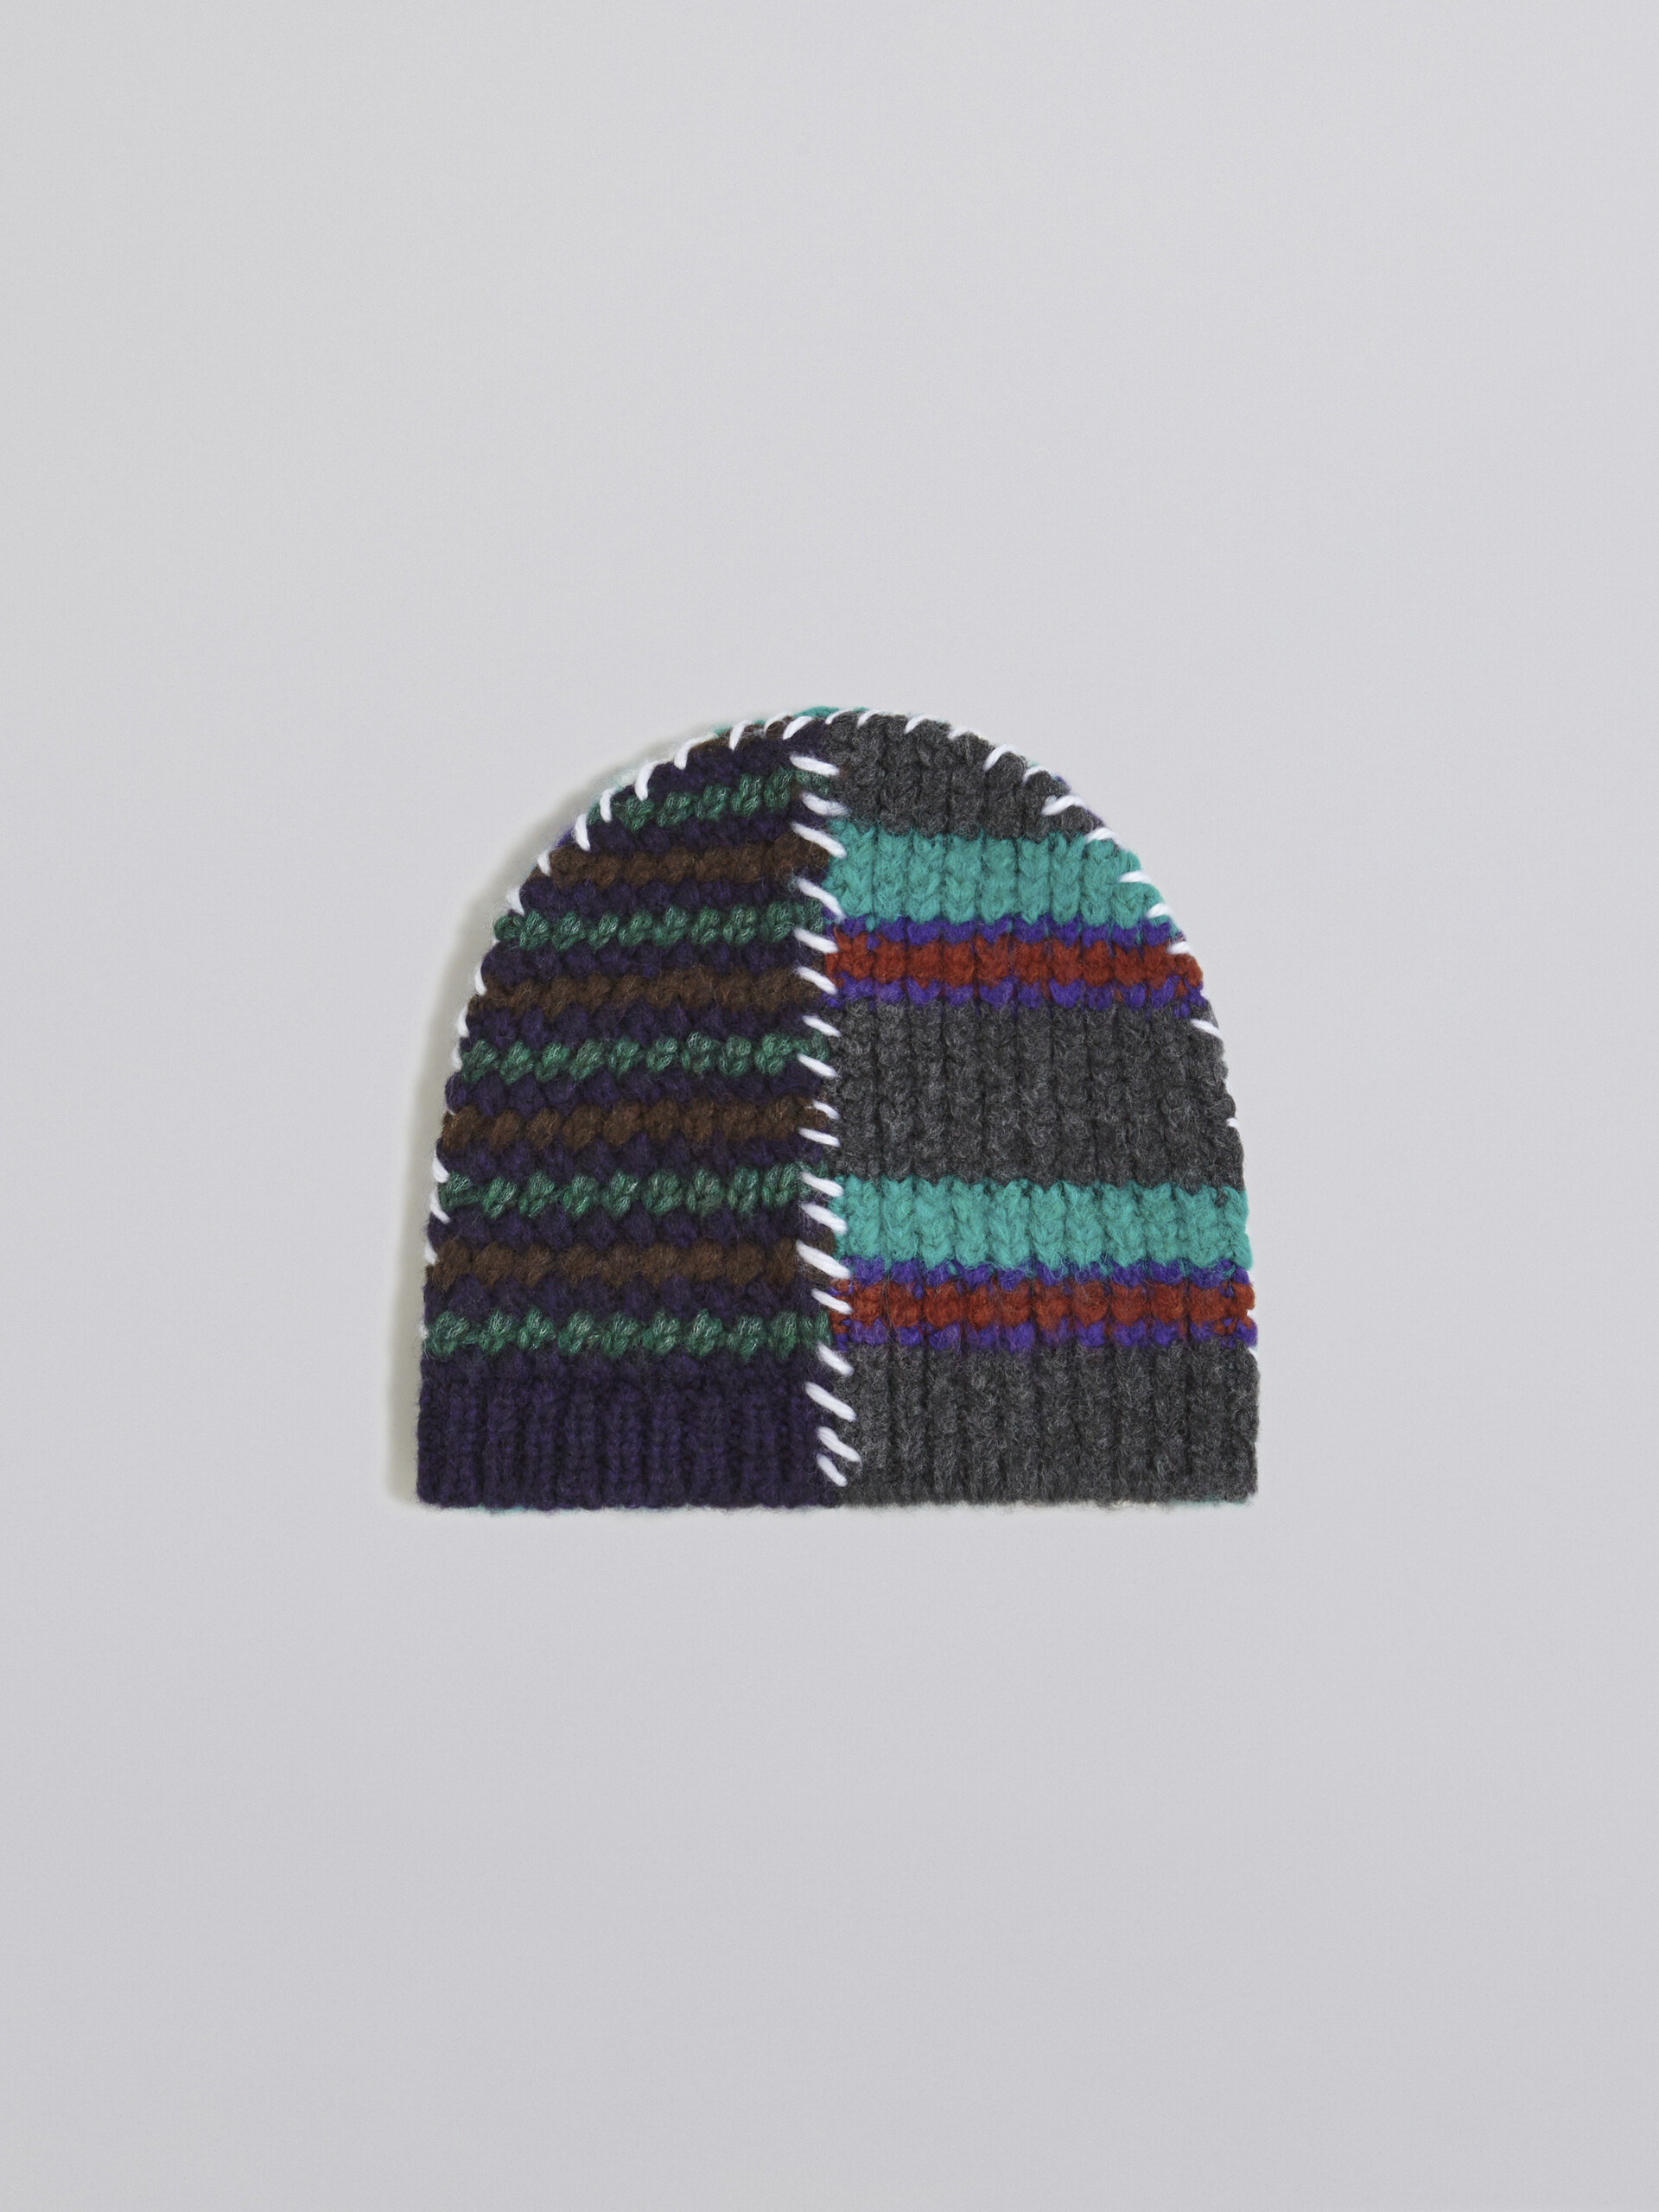 Techno yarns and wool hat - Hats - Image 3